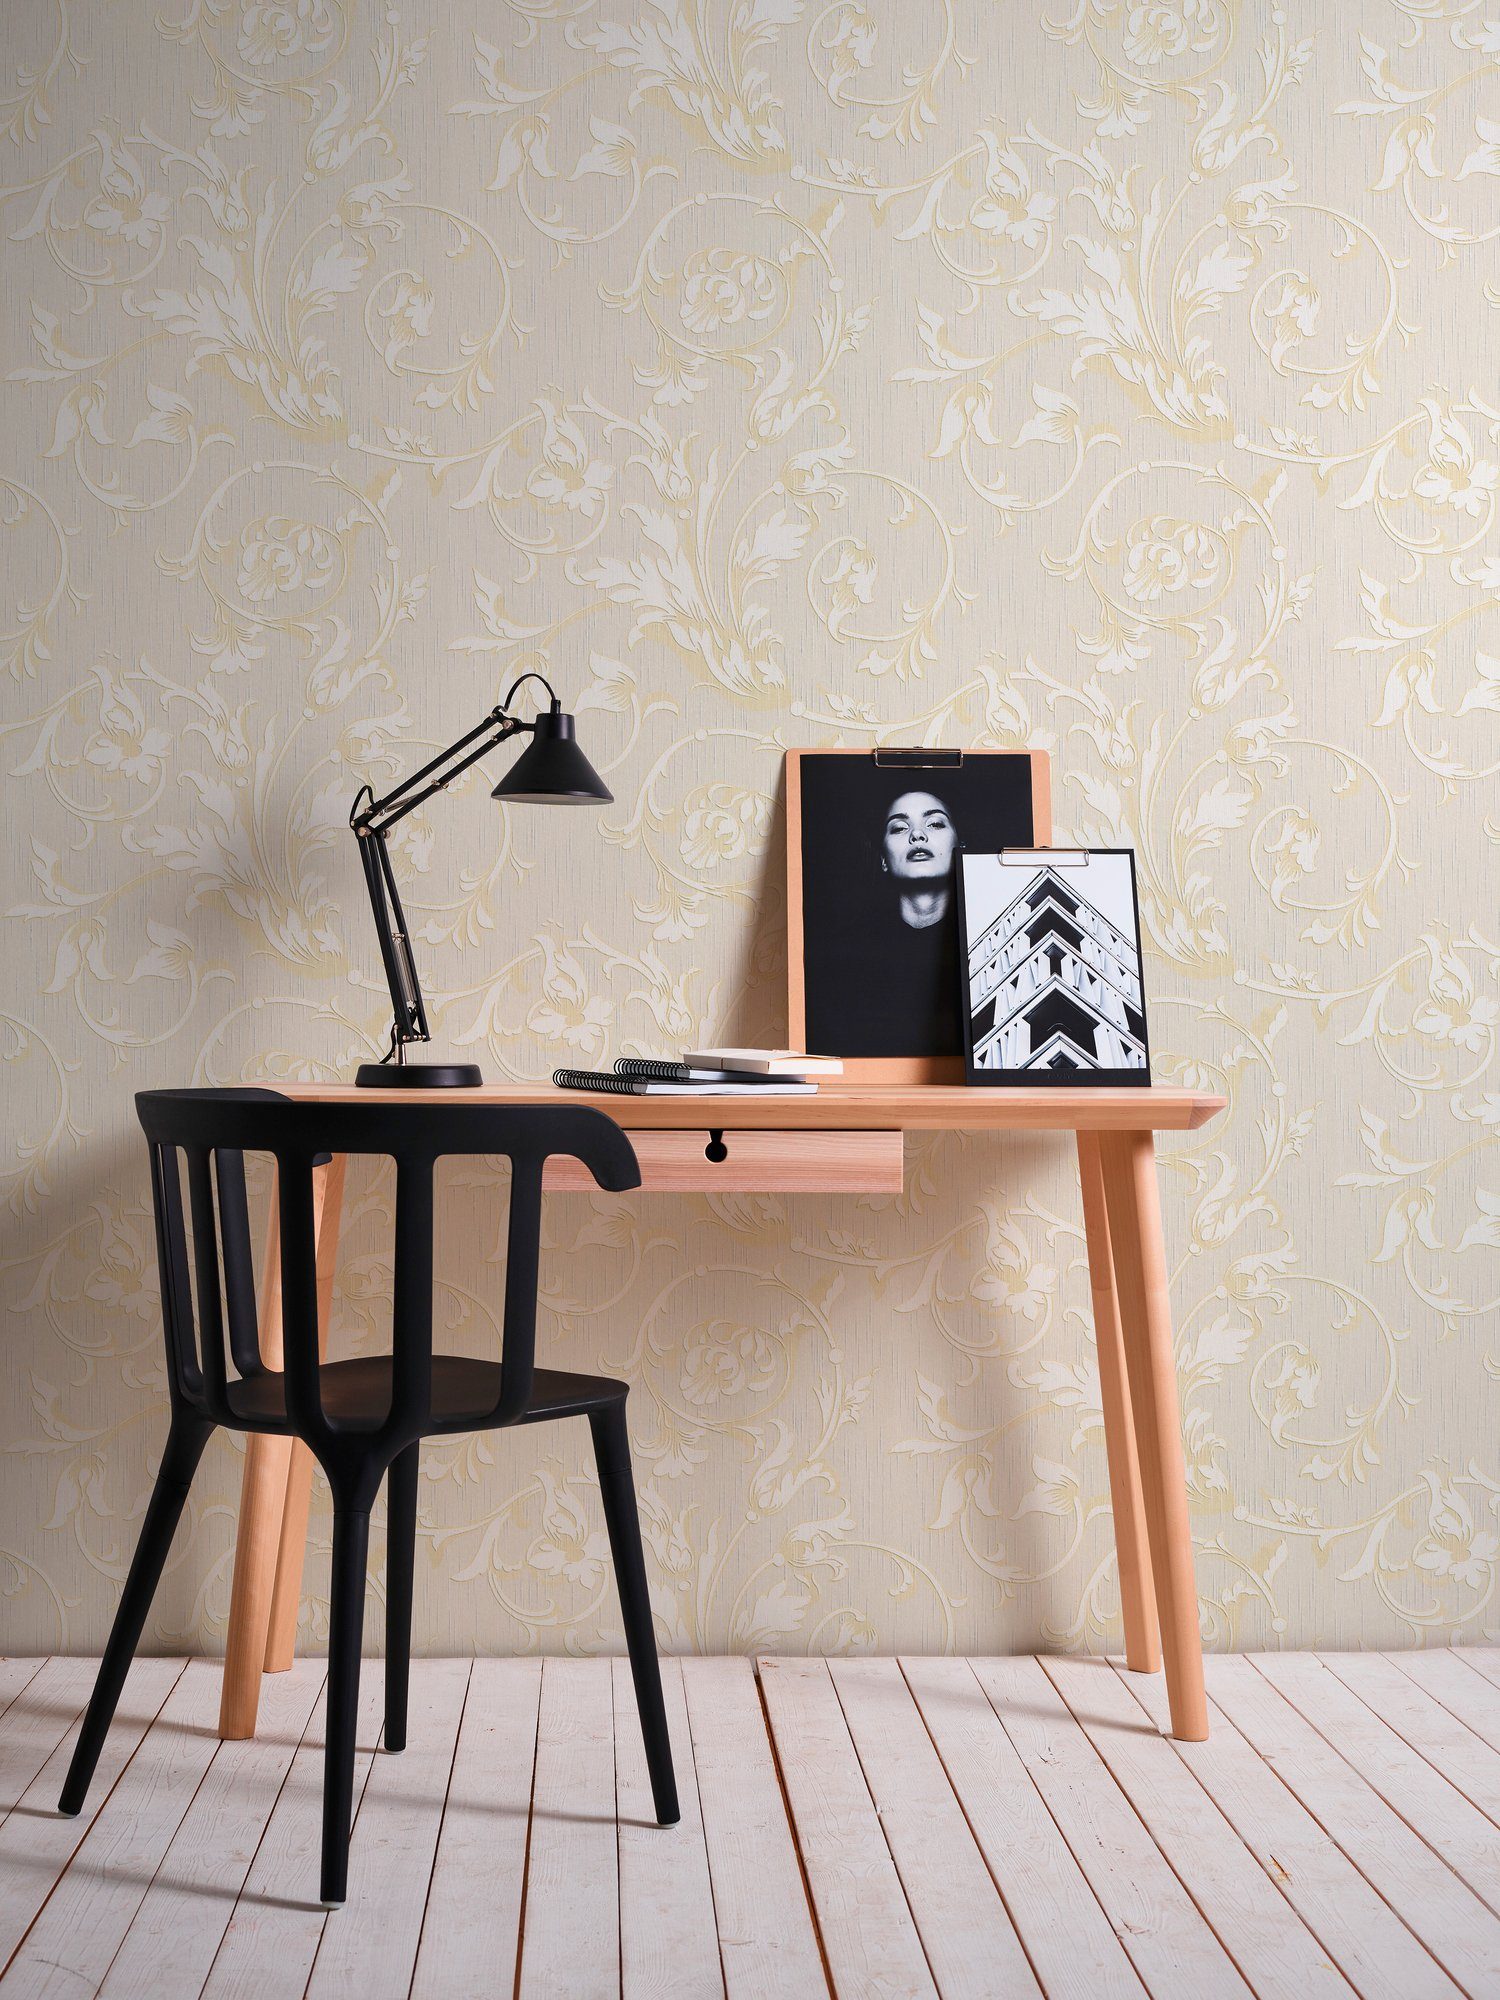 Blumen samtig, Tessuto, Floral creme/gold Architects Tapete Barock, Textiltapete Paper floral,